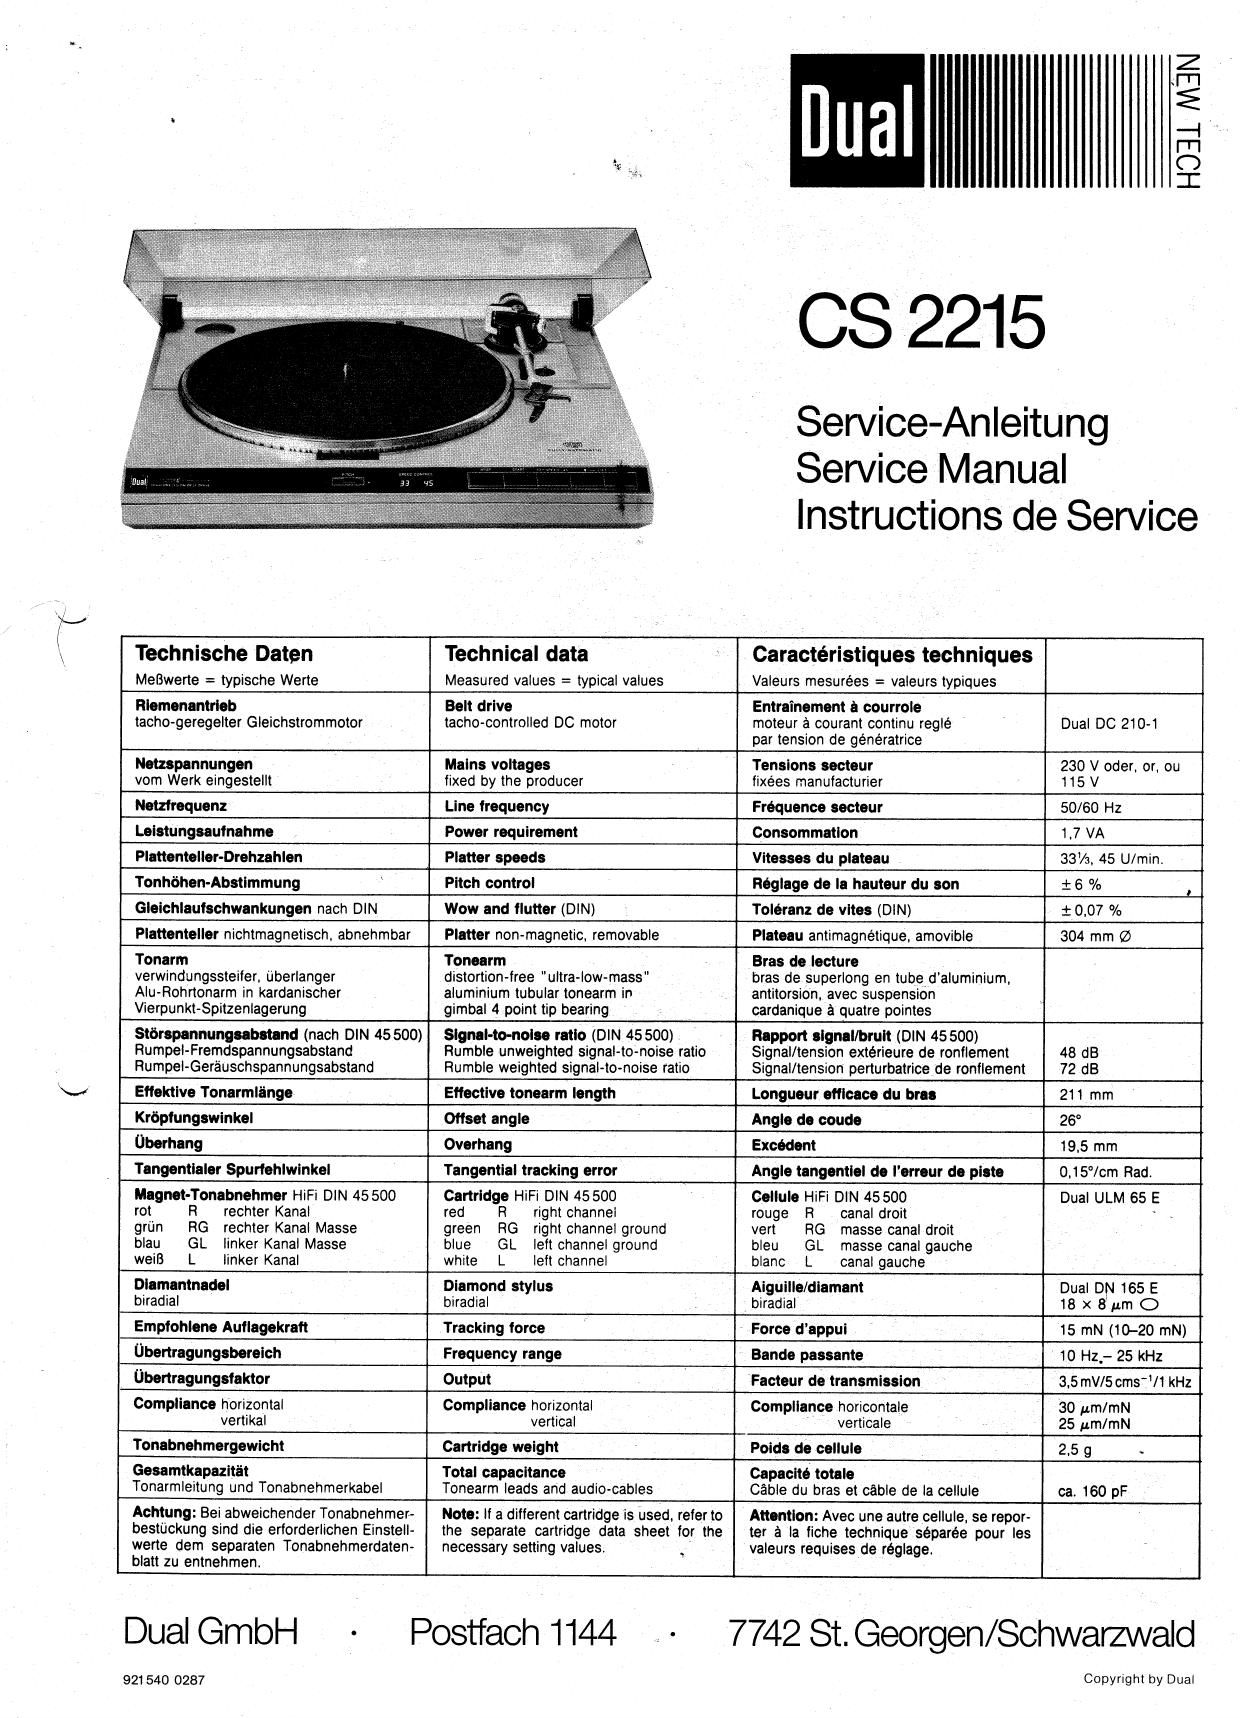 Dual Service Manual für CS 2115  Copy 